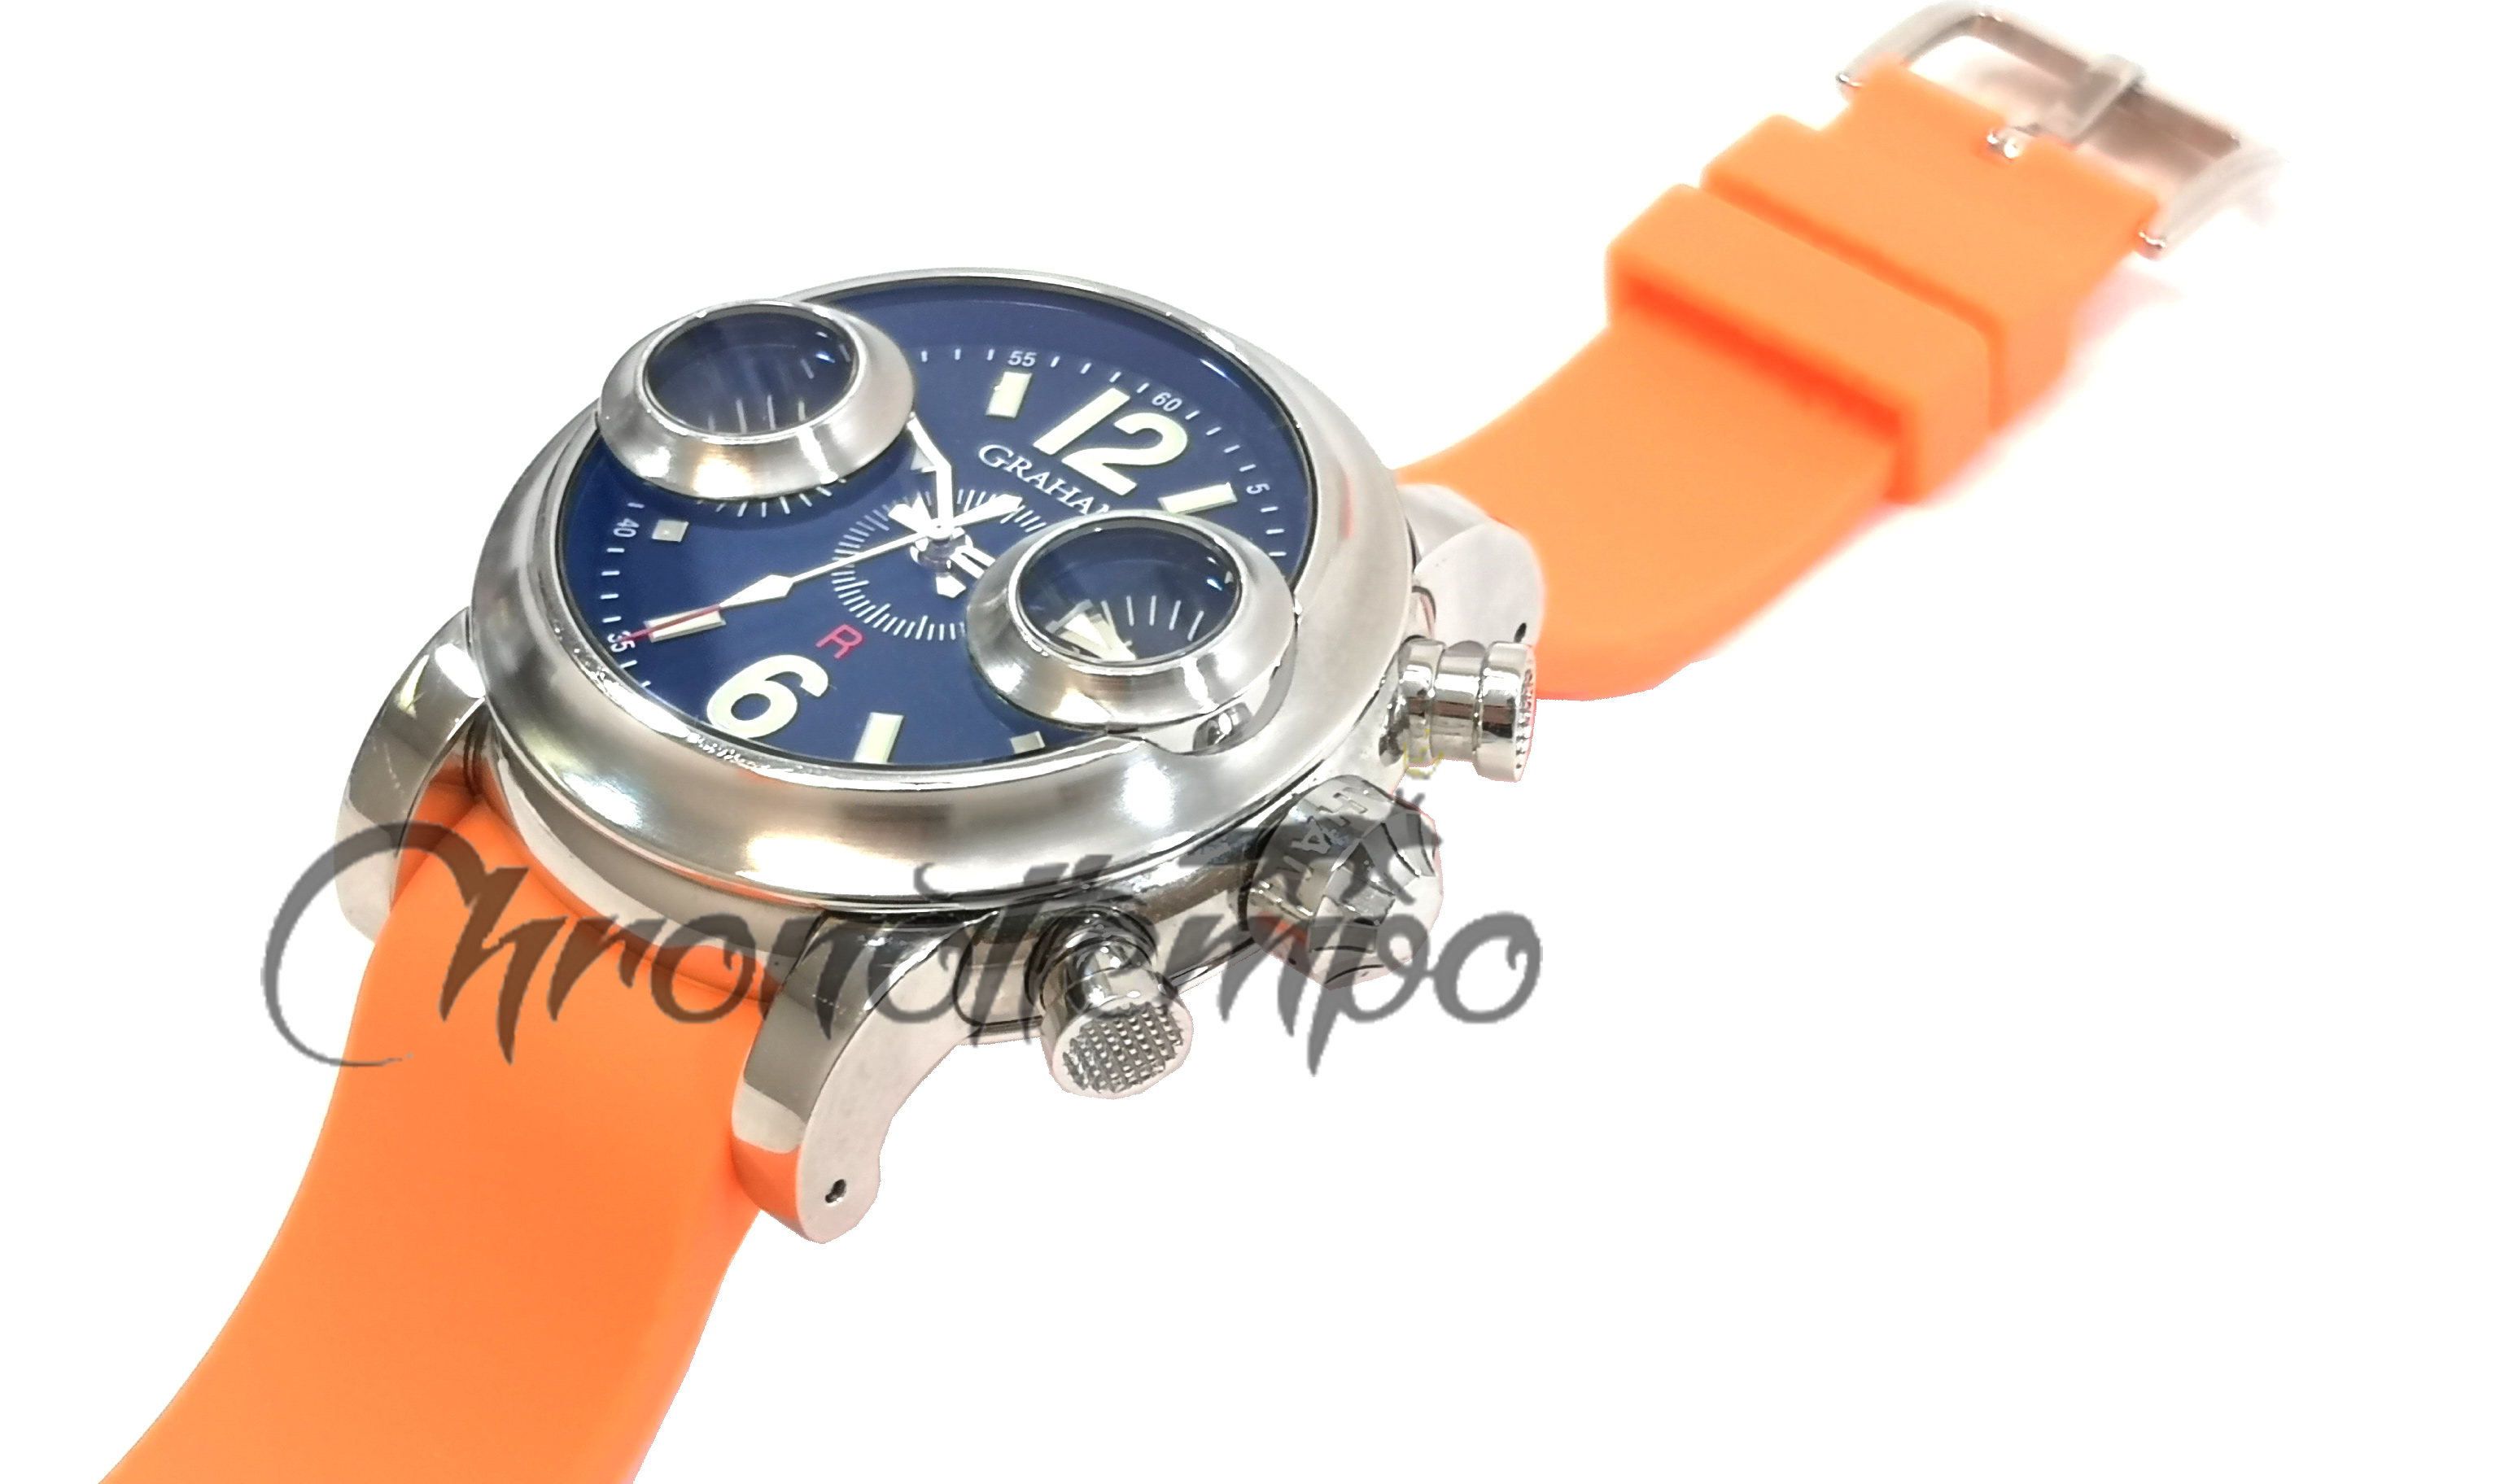 Chronotiempo Curved Orange Silicone Watch Band Strap 22mm For Graham Swordfish Bracelet Free Tools